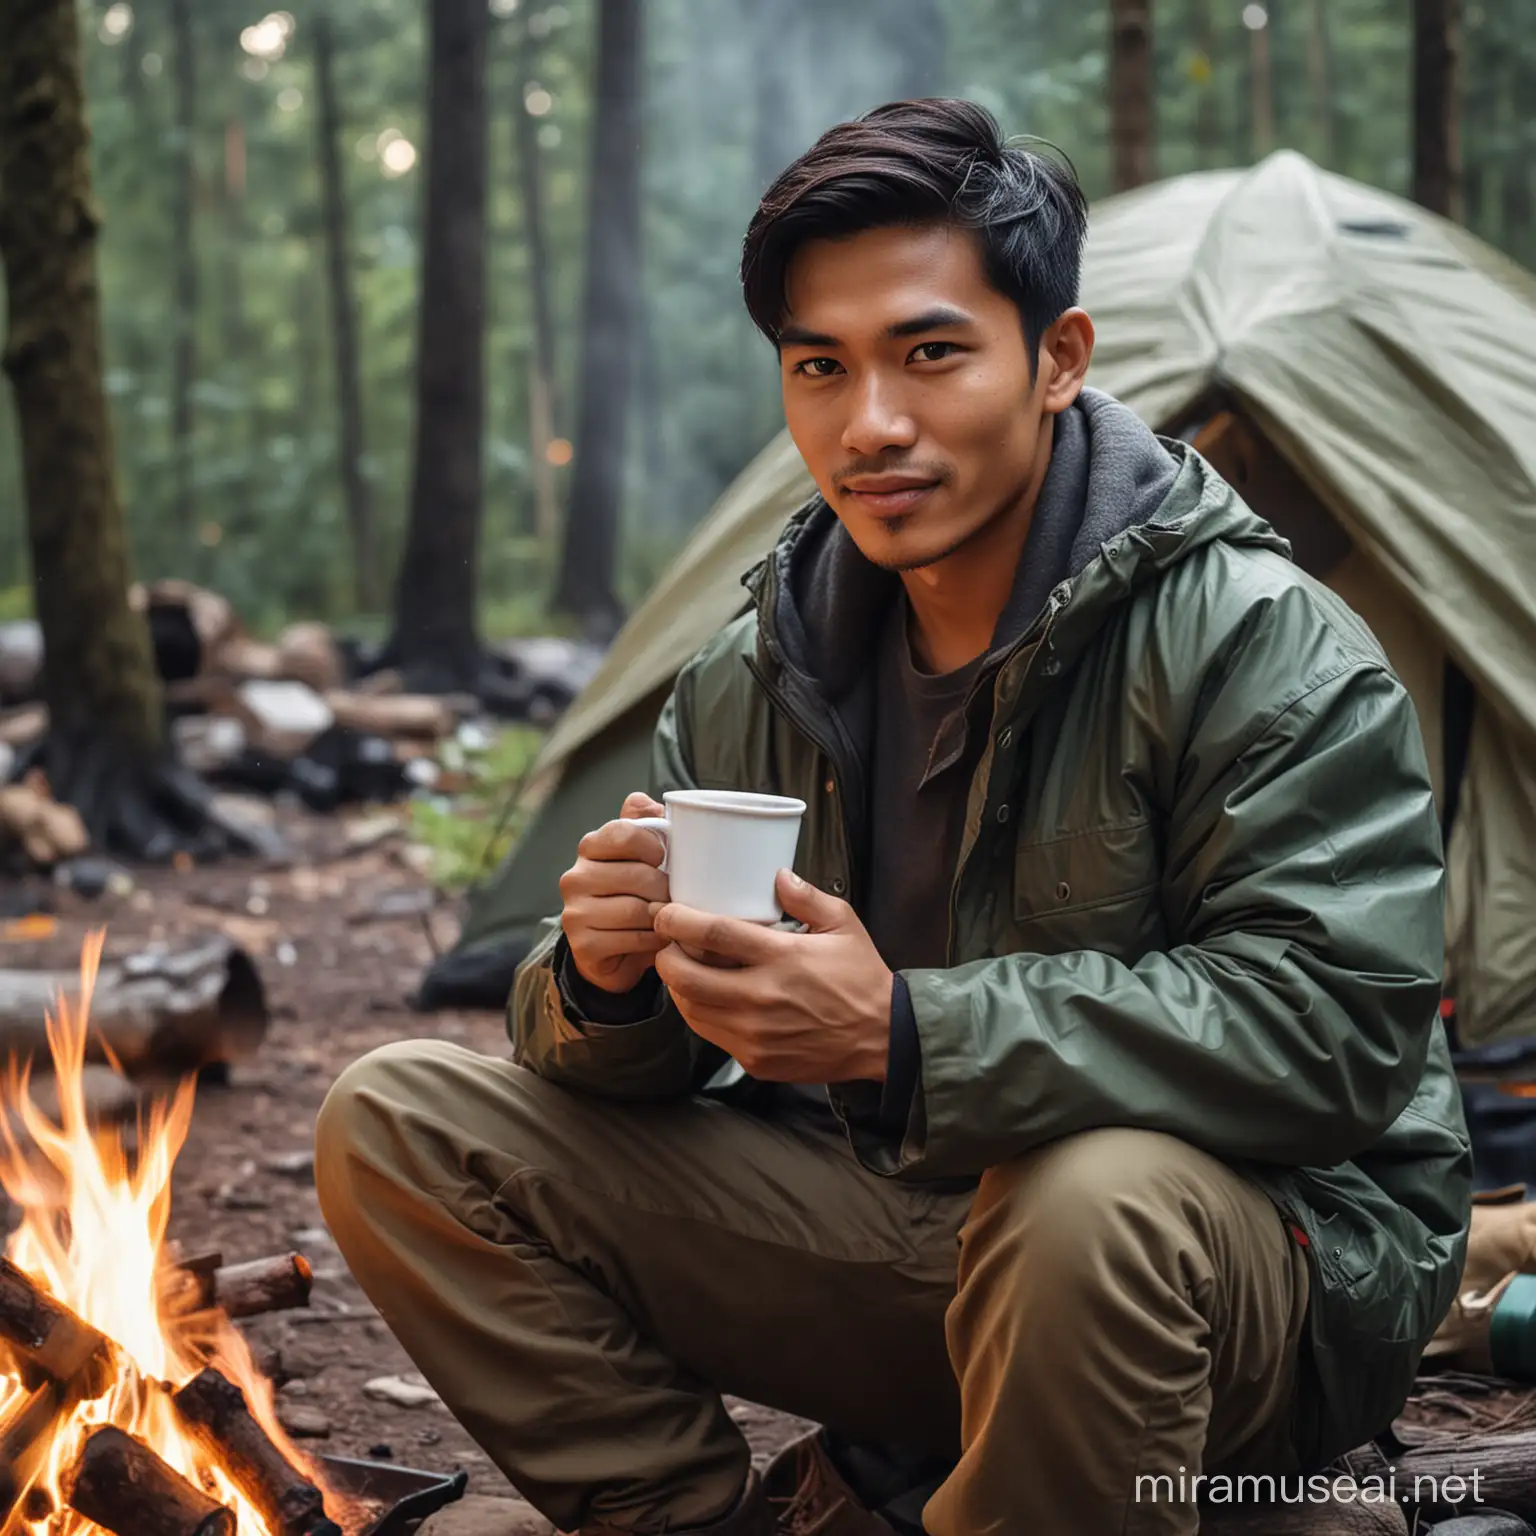 Indonesian Man Enjoying Coffee by Campfire in Drizzling Rain